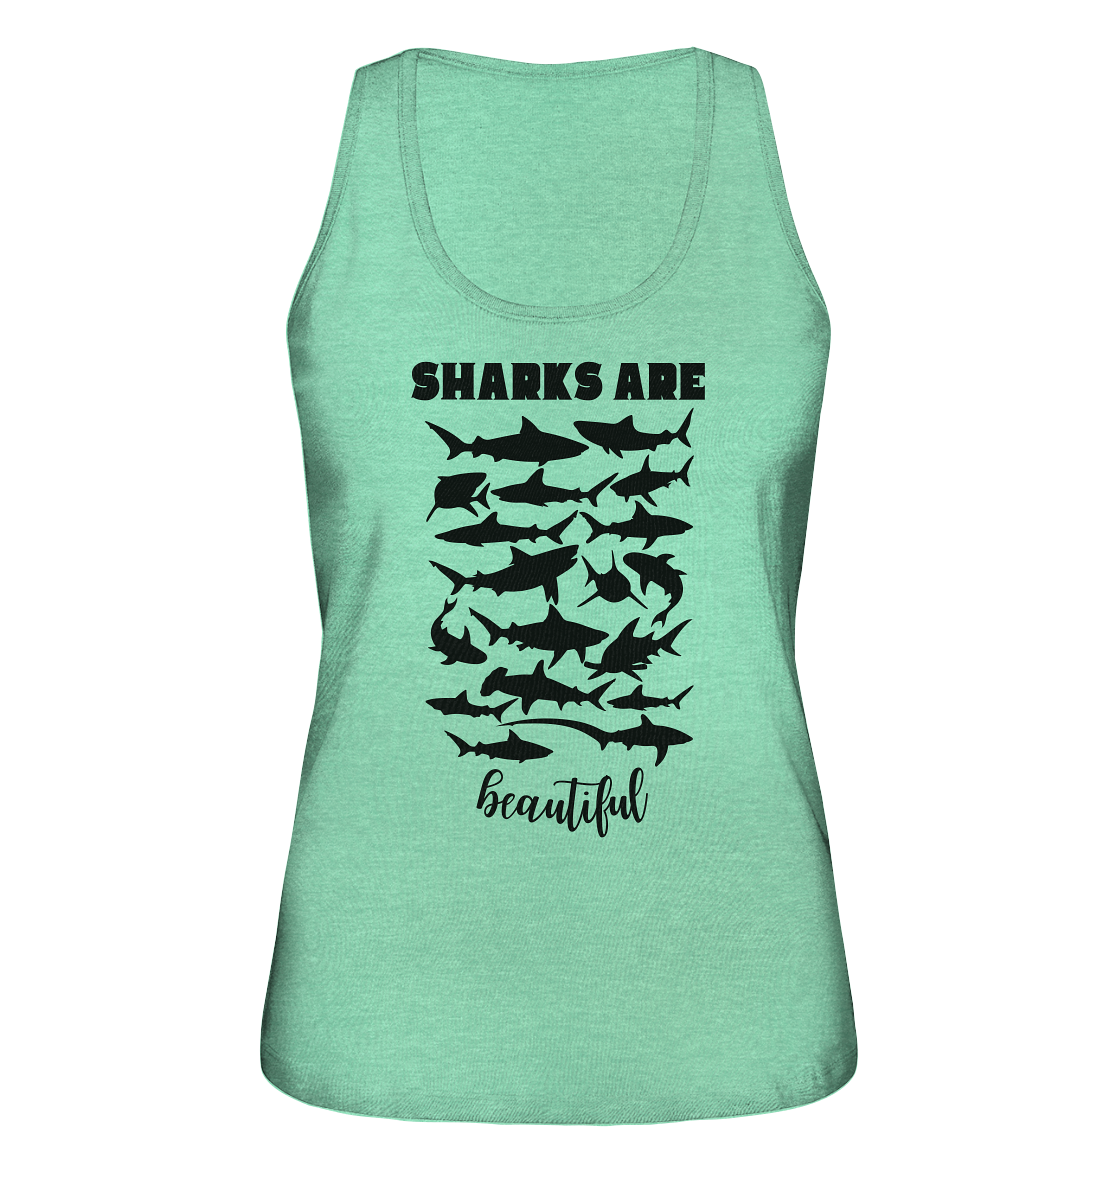 Sharks are beautiful - Ladies Organic Tank-Top